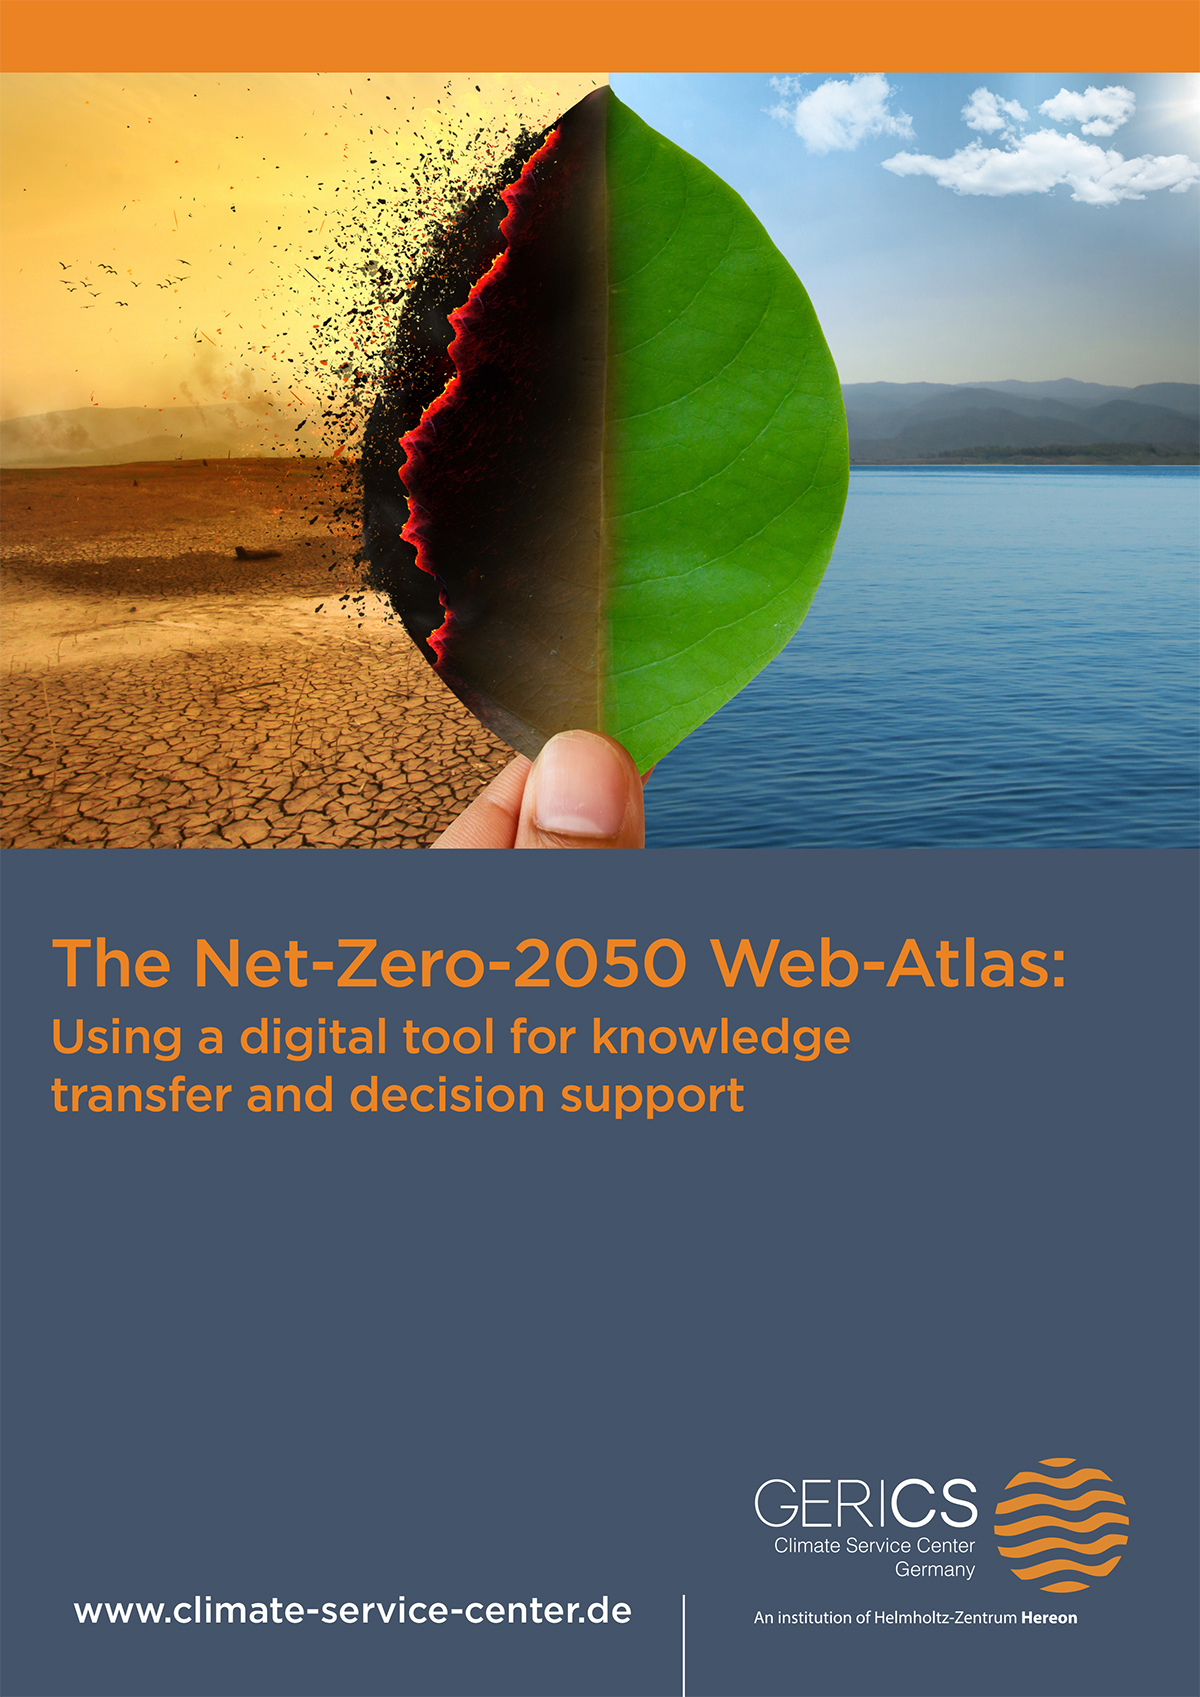 The Net-Zero-2050 Web-Atlas